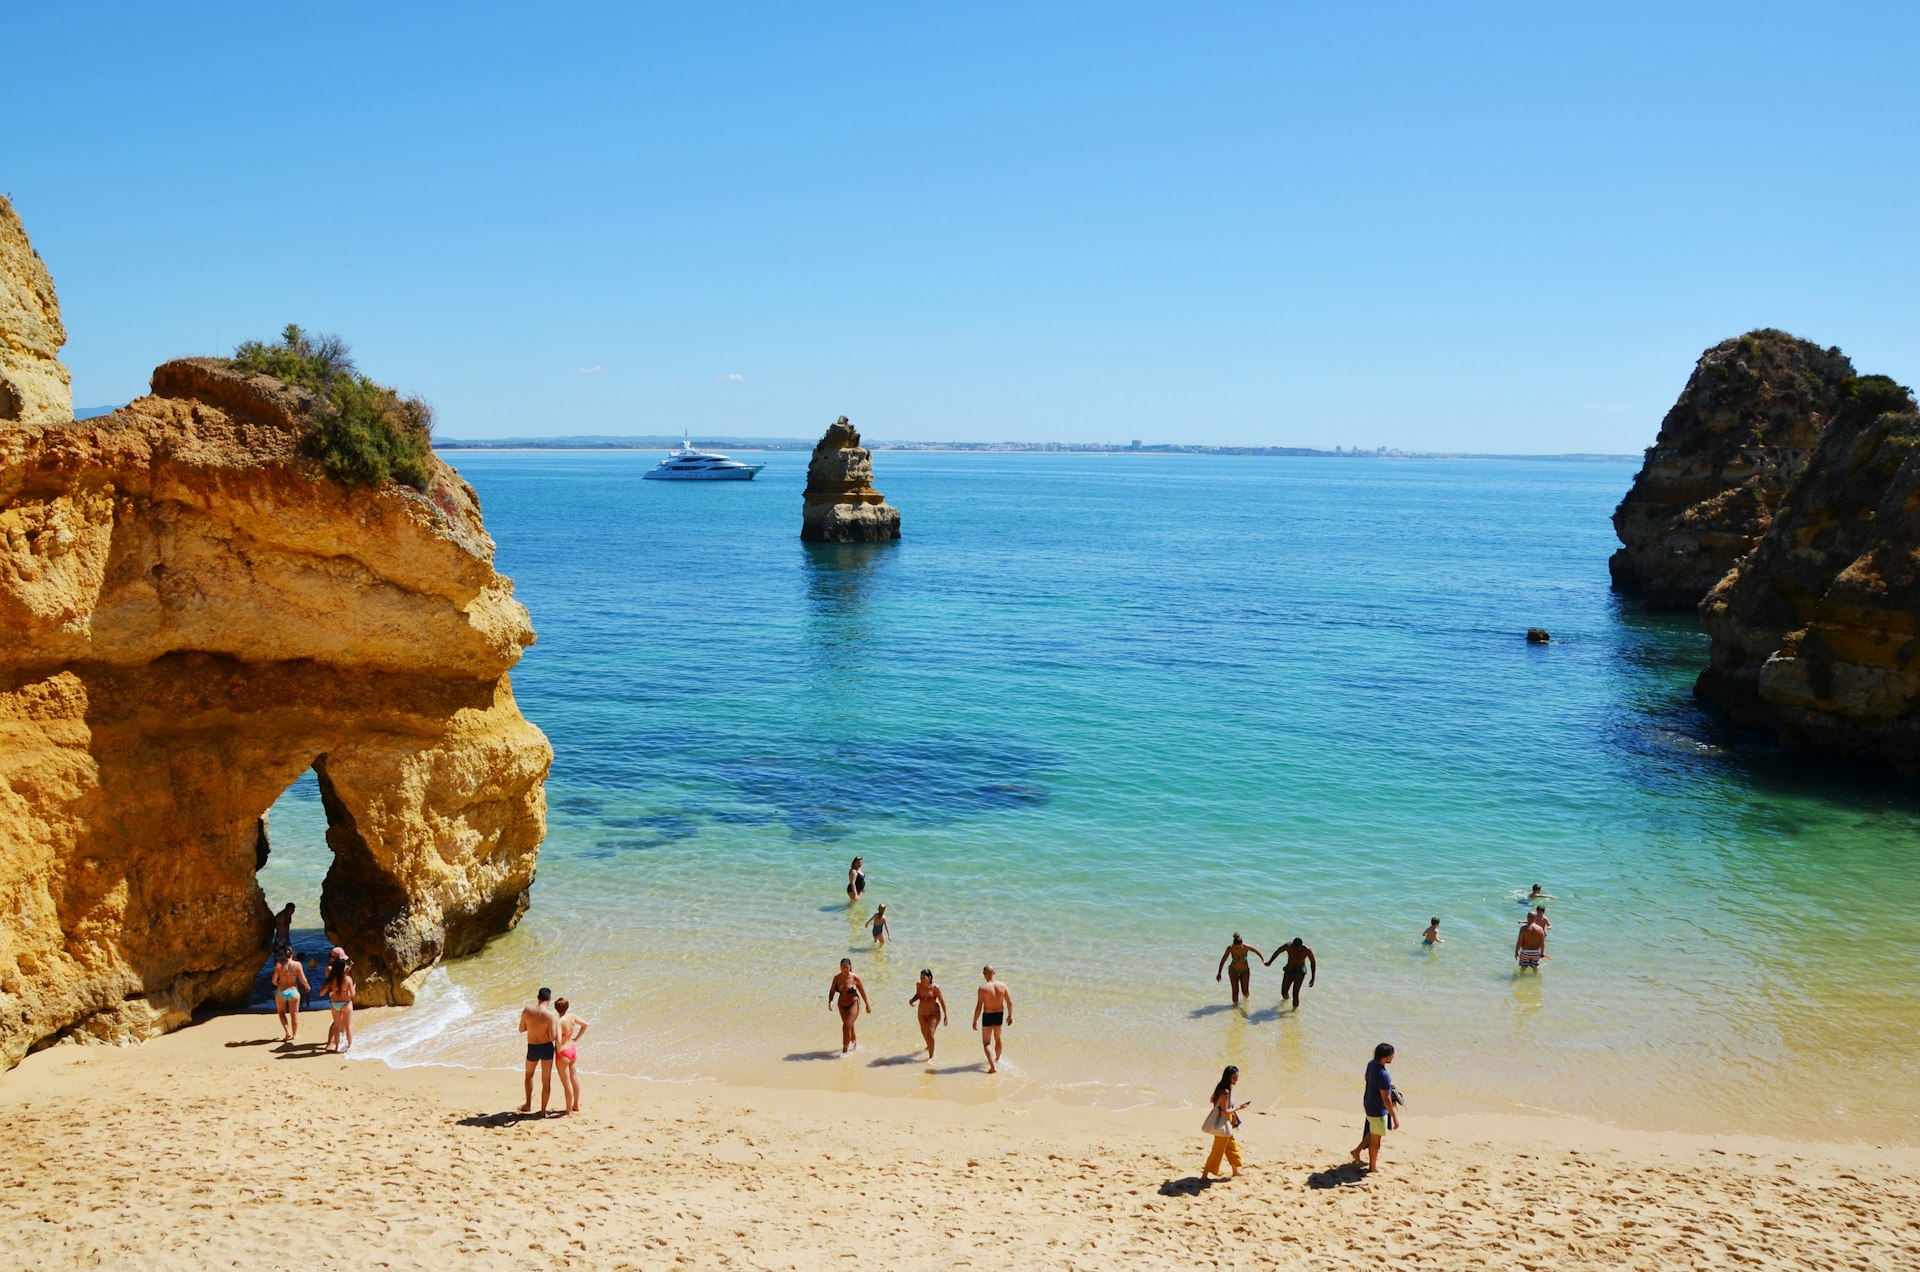 People wade into the water at scenic Camilo Beach (Praia do Camilo) in the Algarve, Portugal, Europe